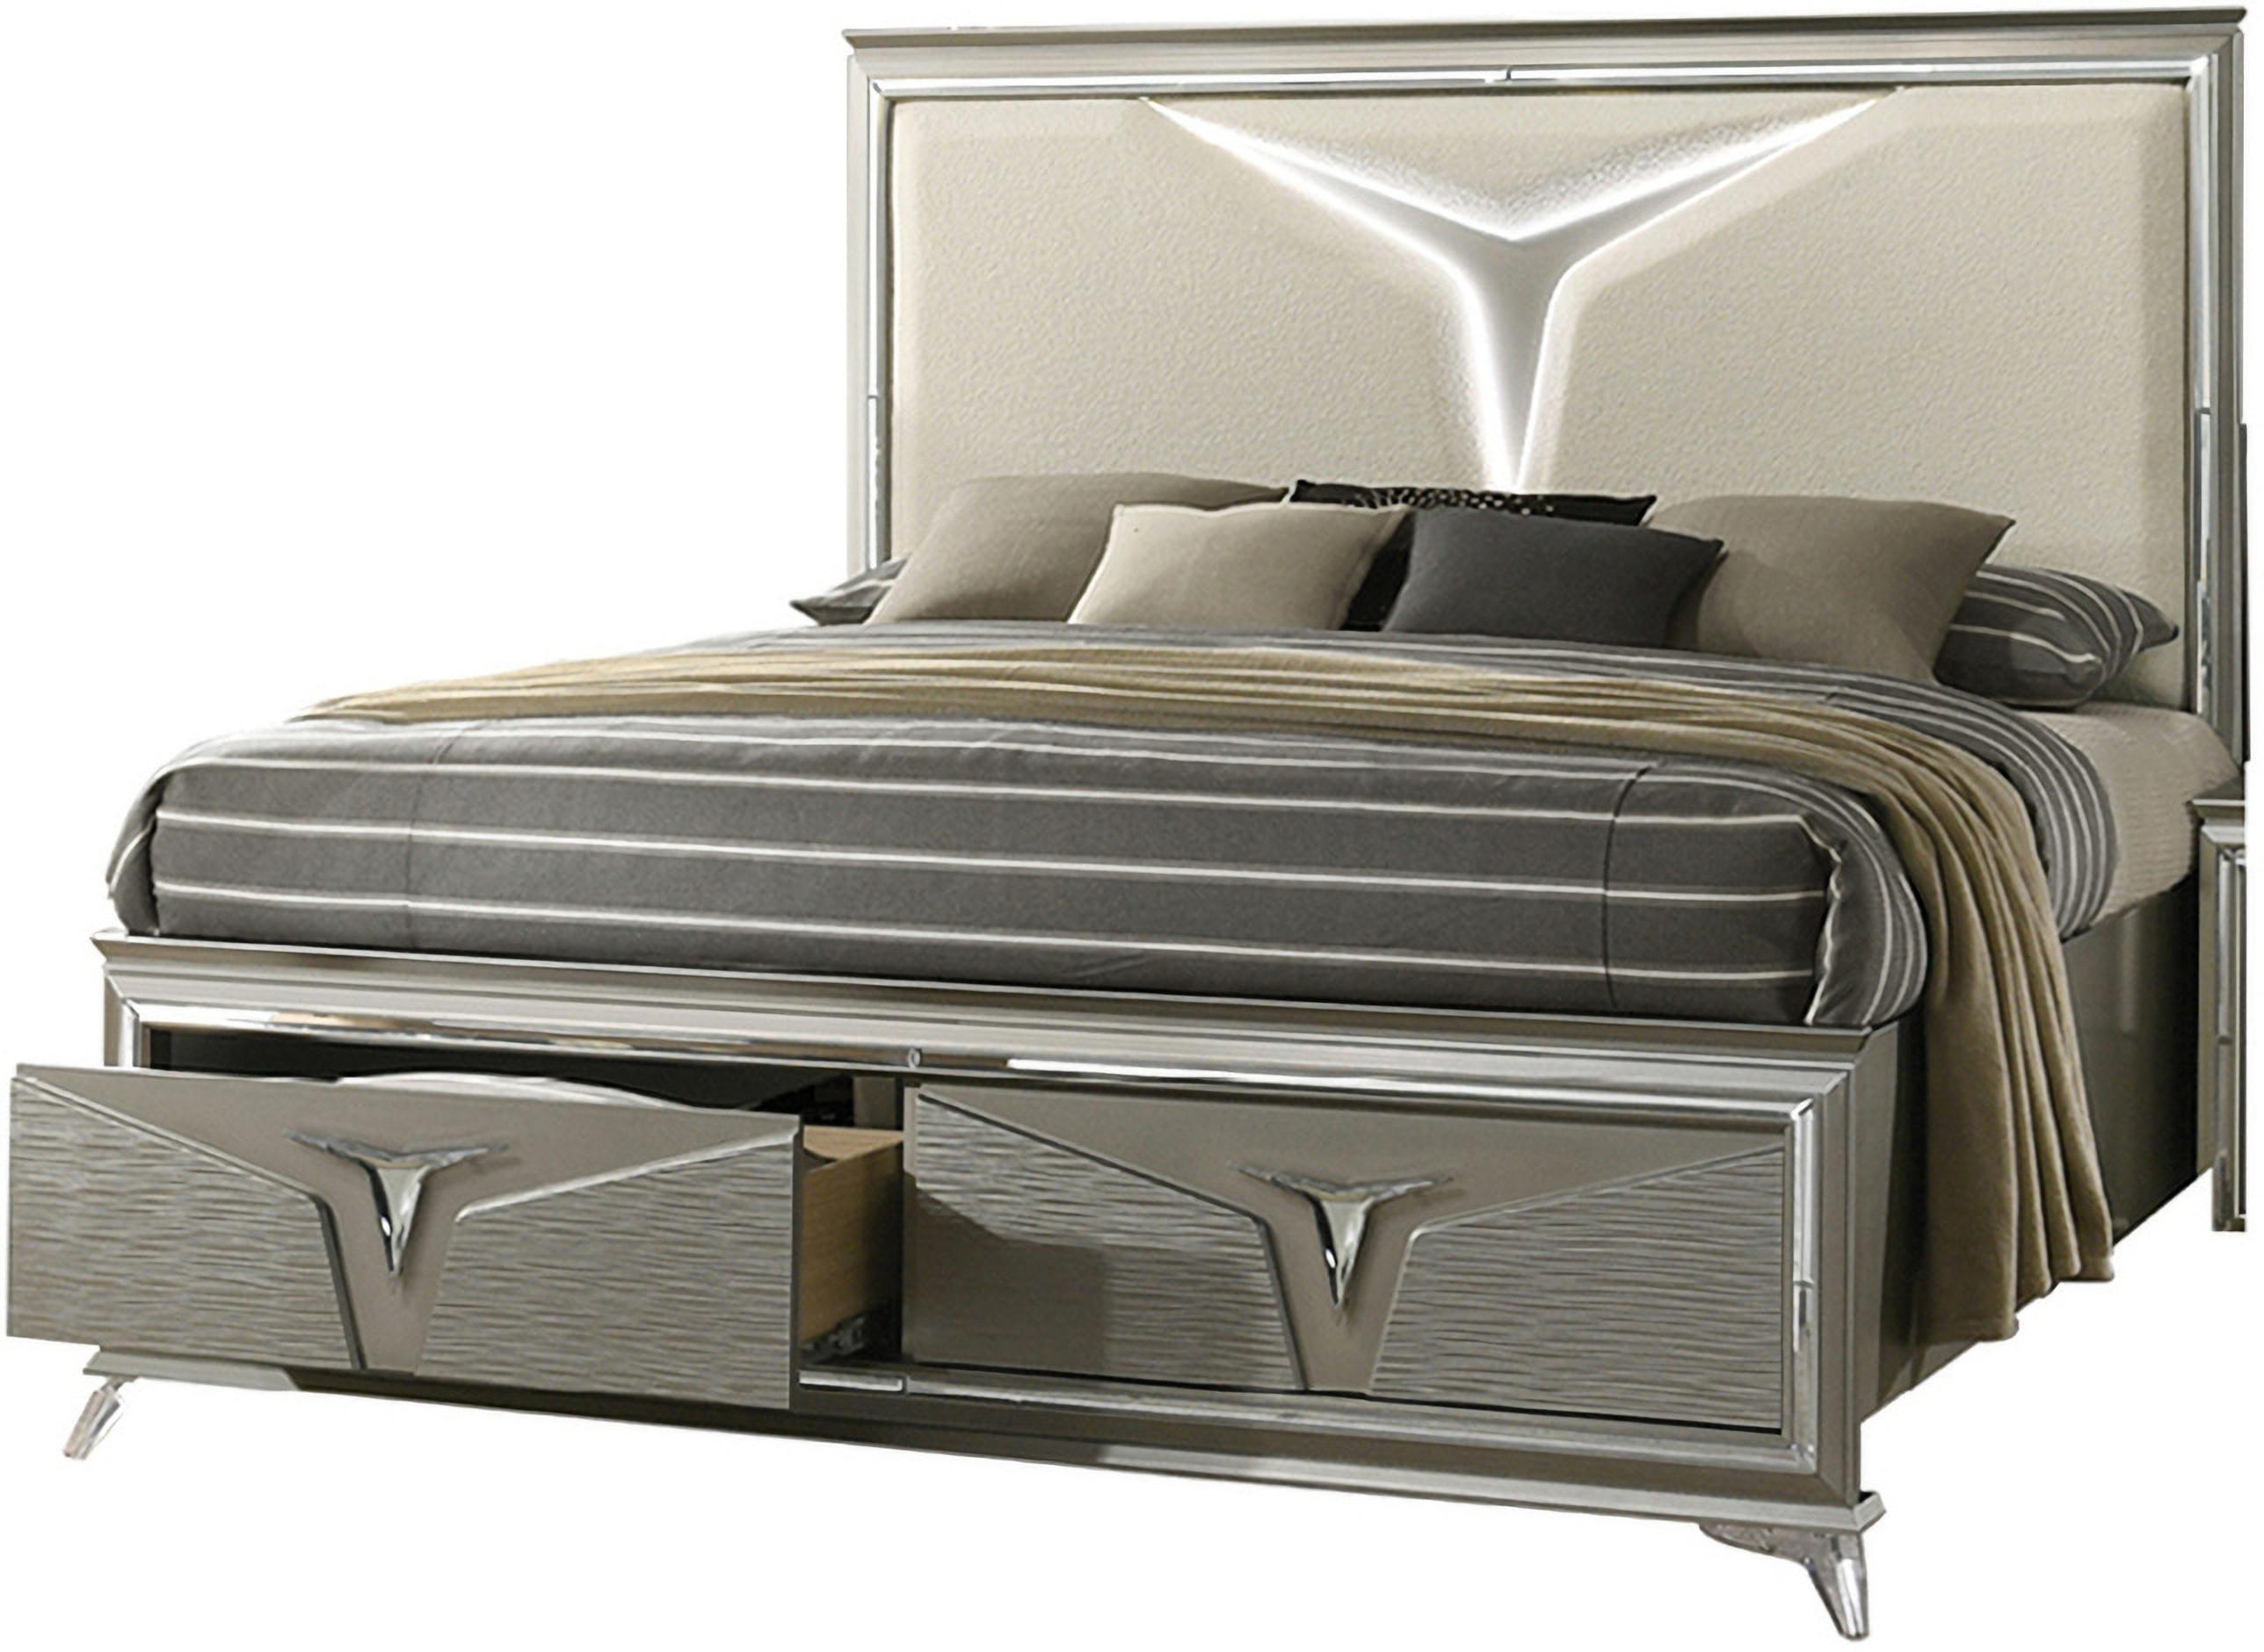 Contemporary, Modern Storage Bed Samantha Samantha-EK in Silver Fabric